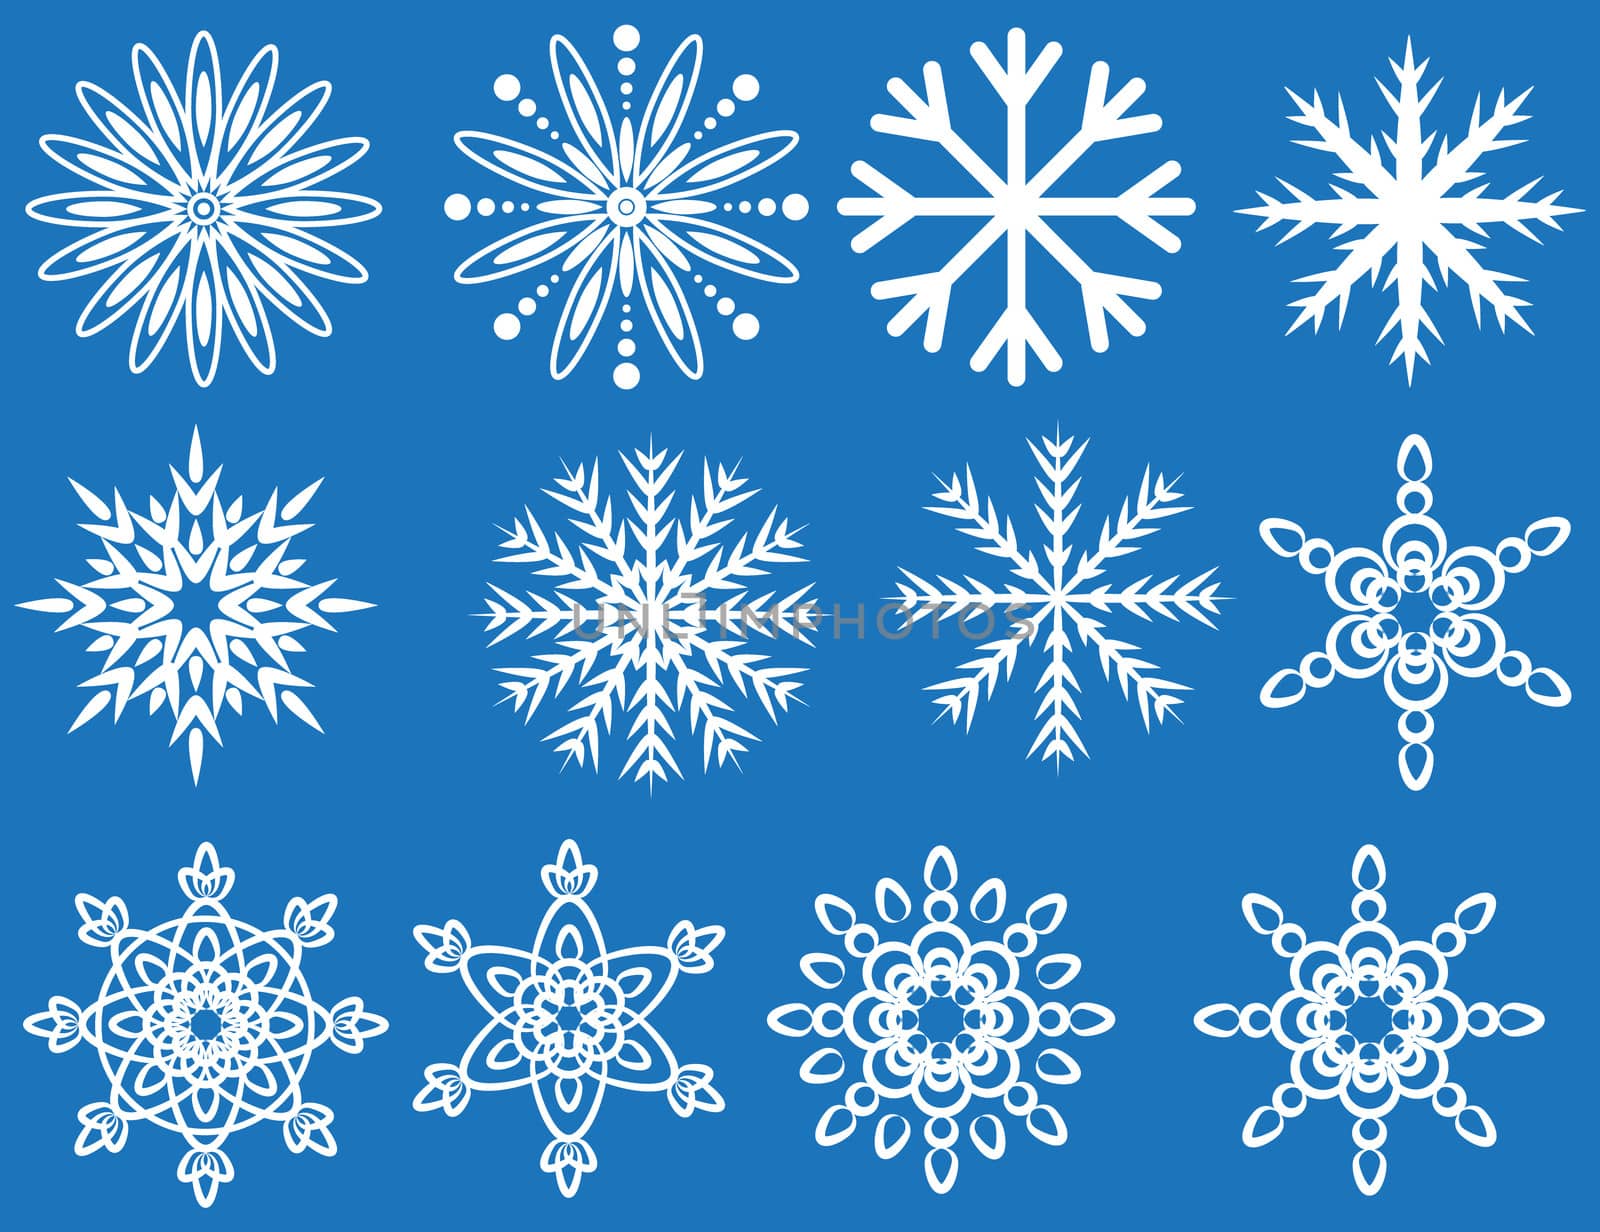 snowflakes by rodakm